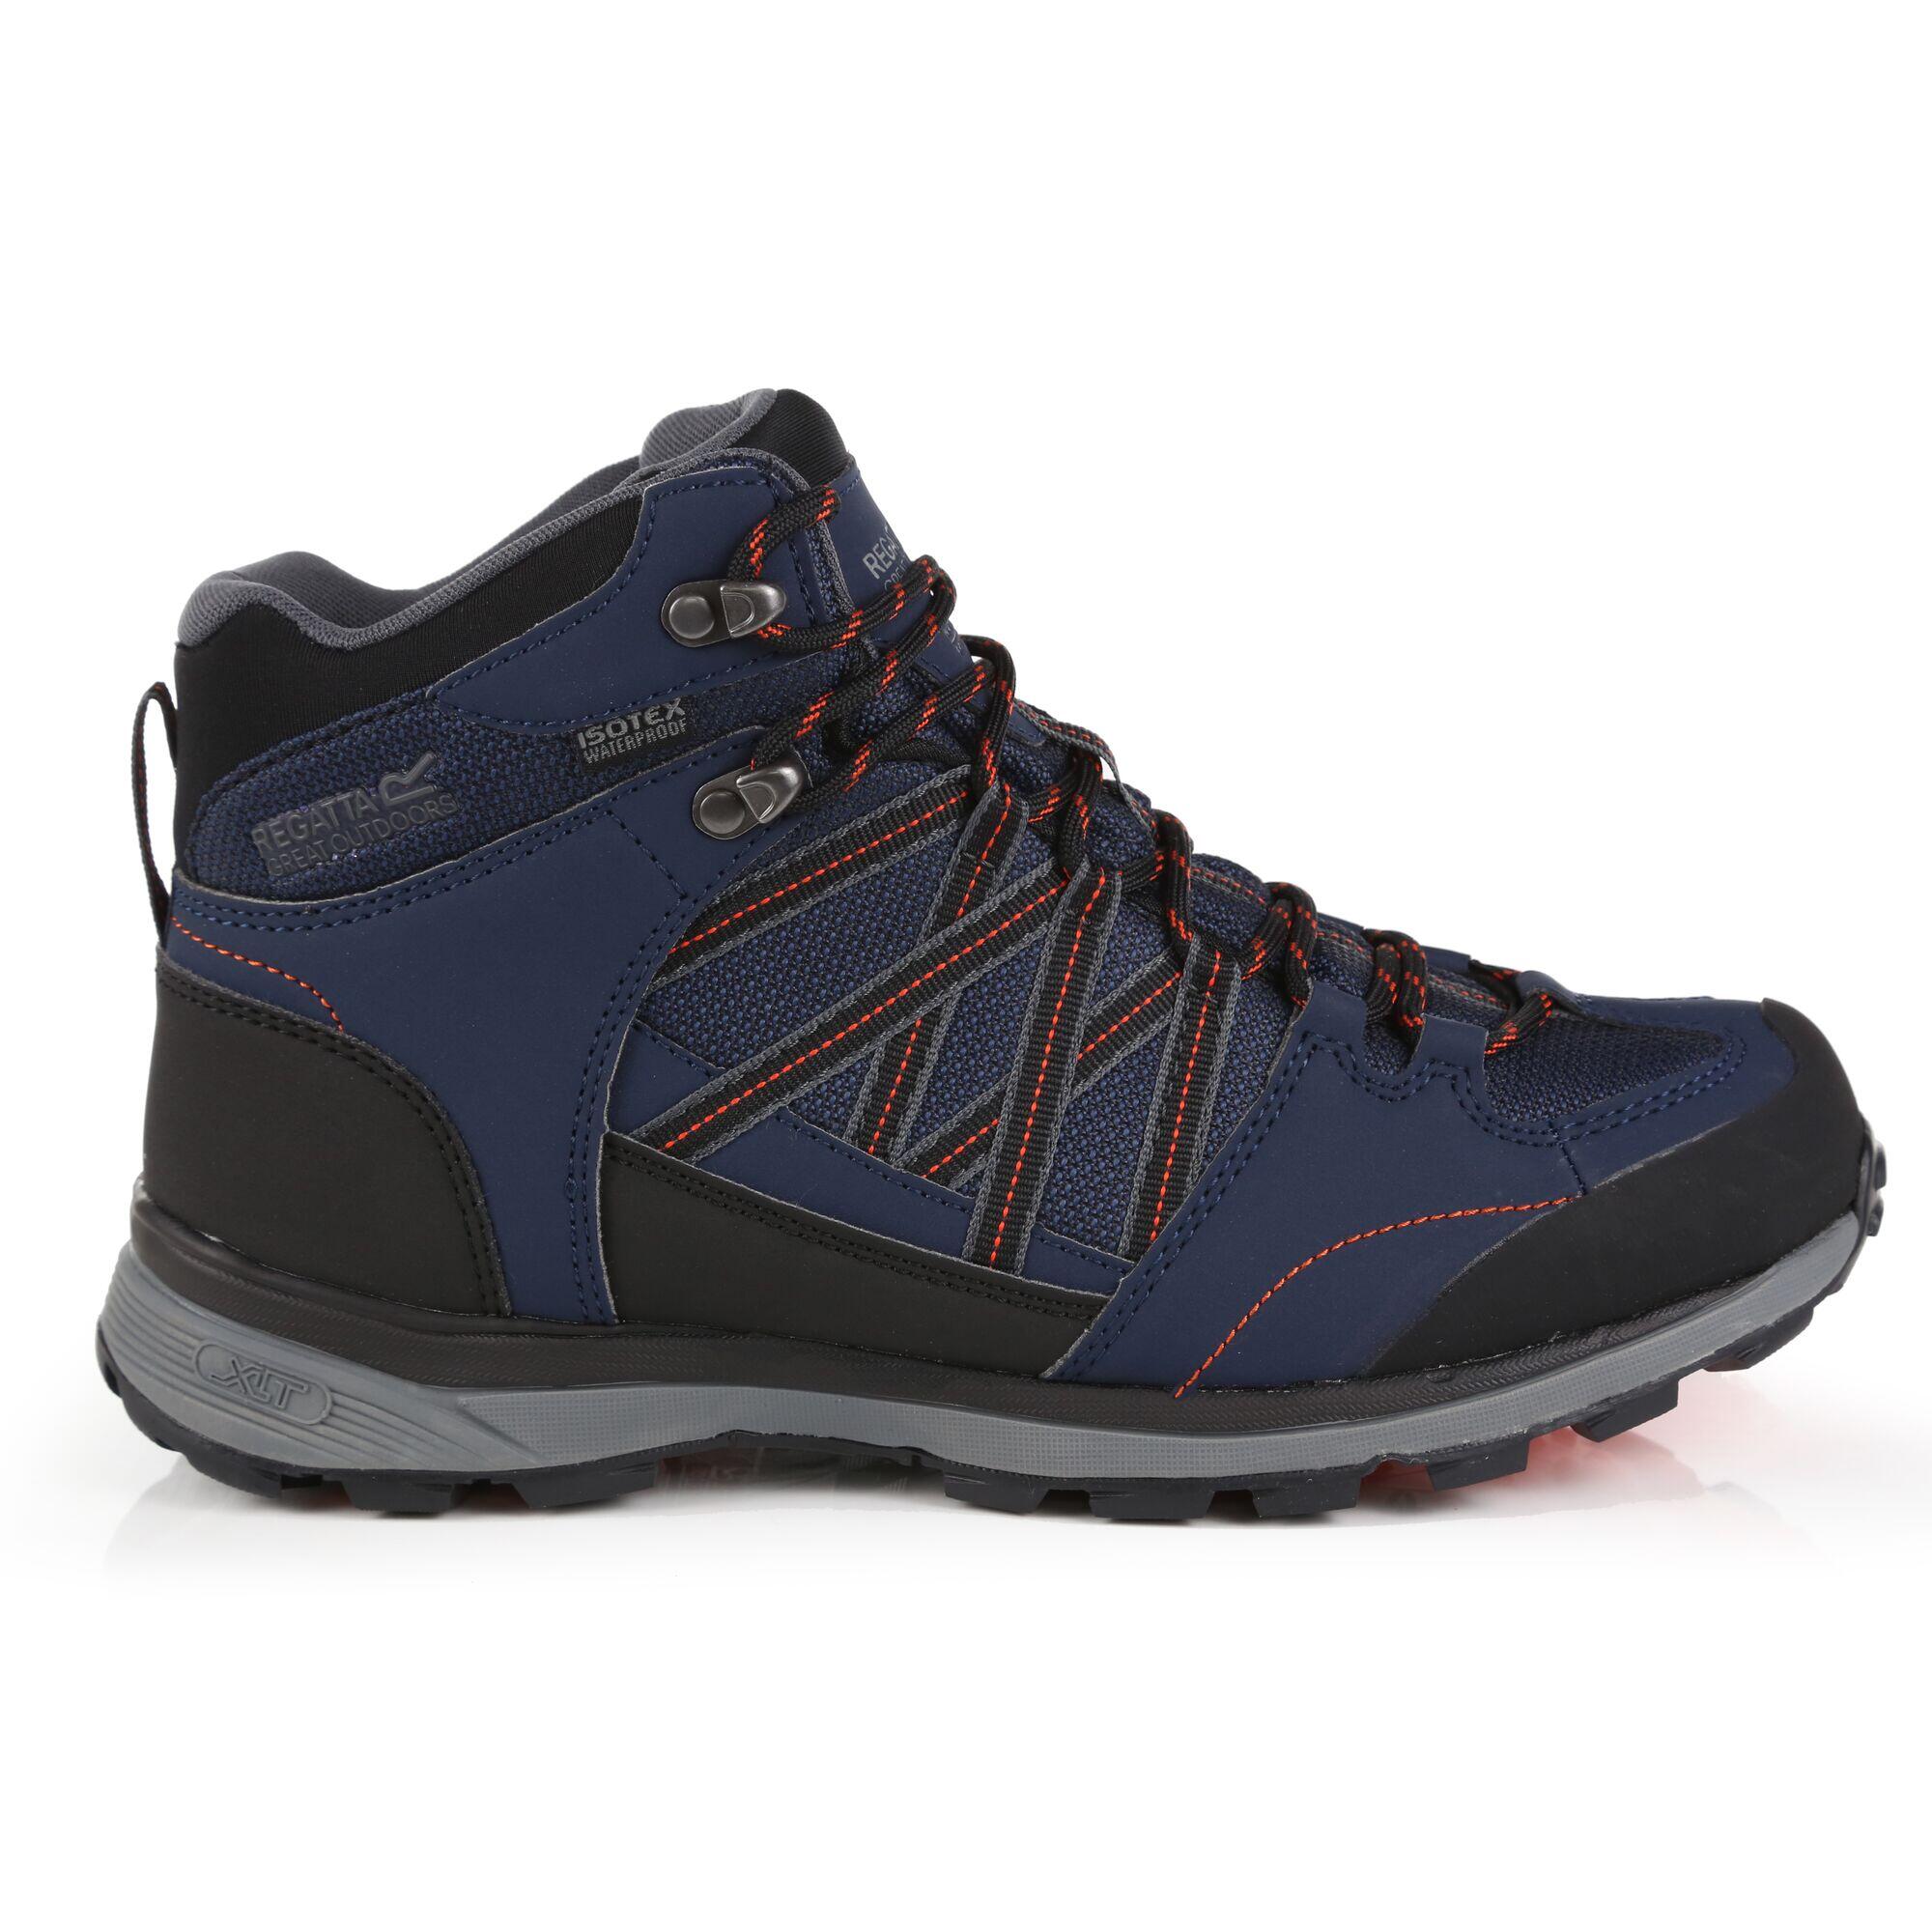 Samaris II Men's Hiking Boots - Navy/Orange 2/5